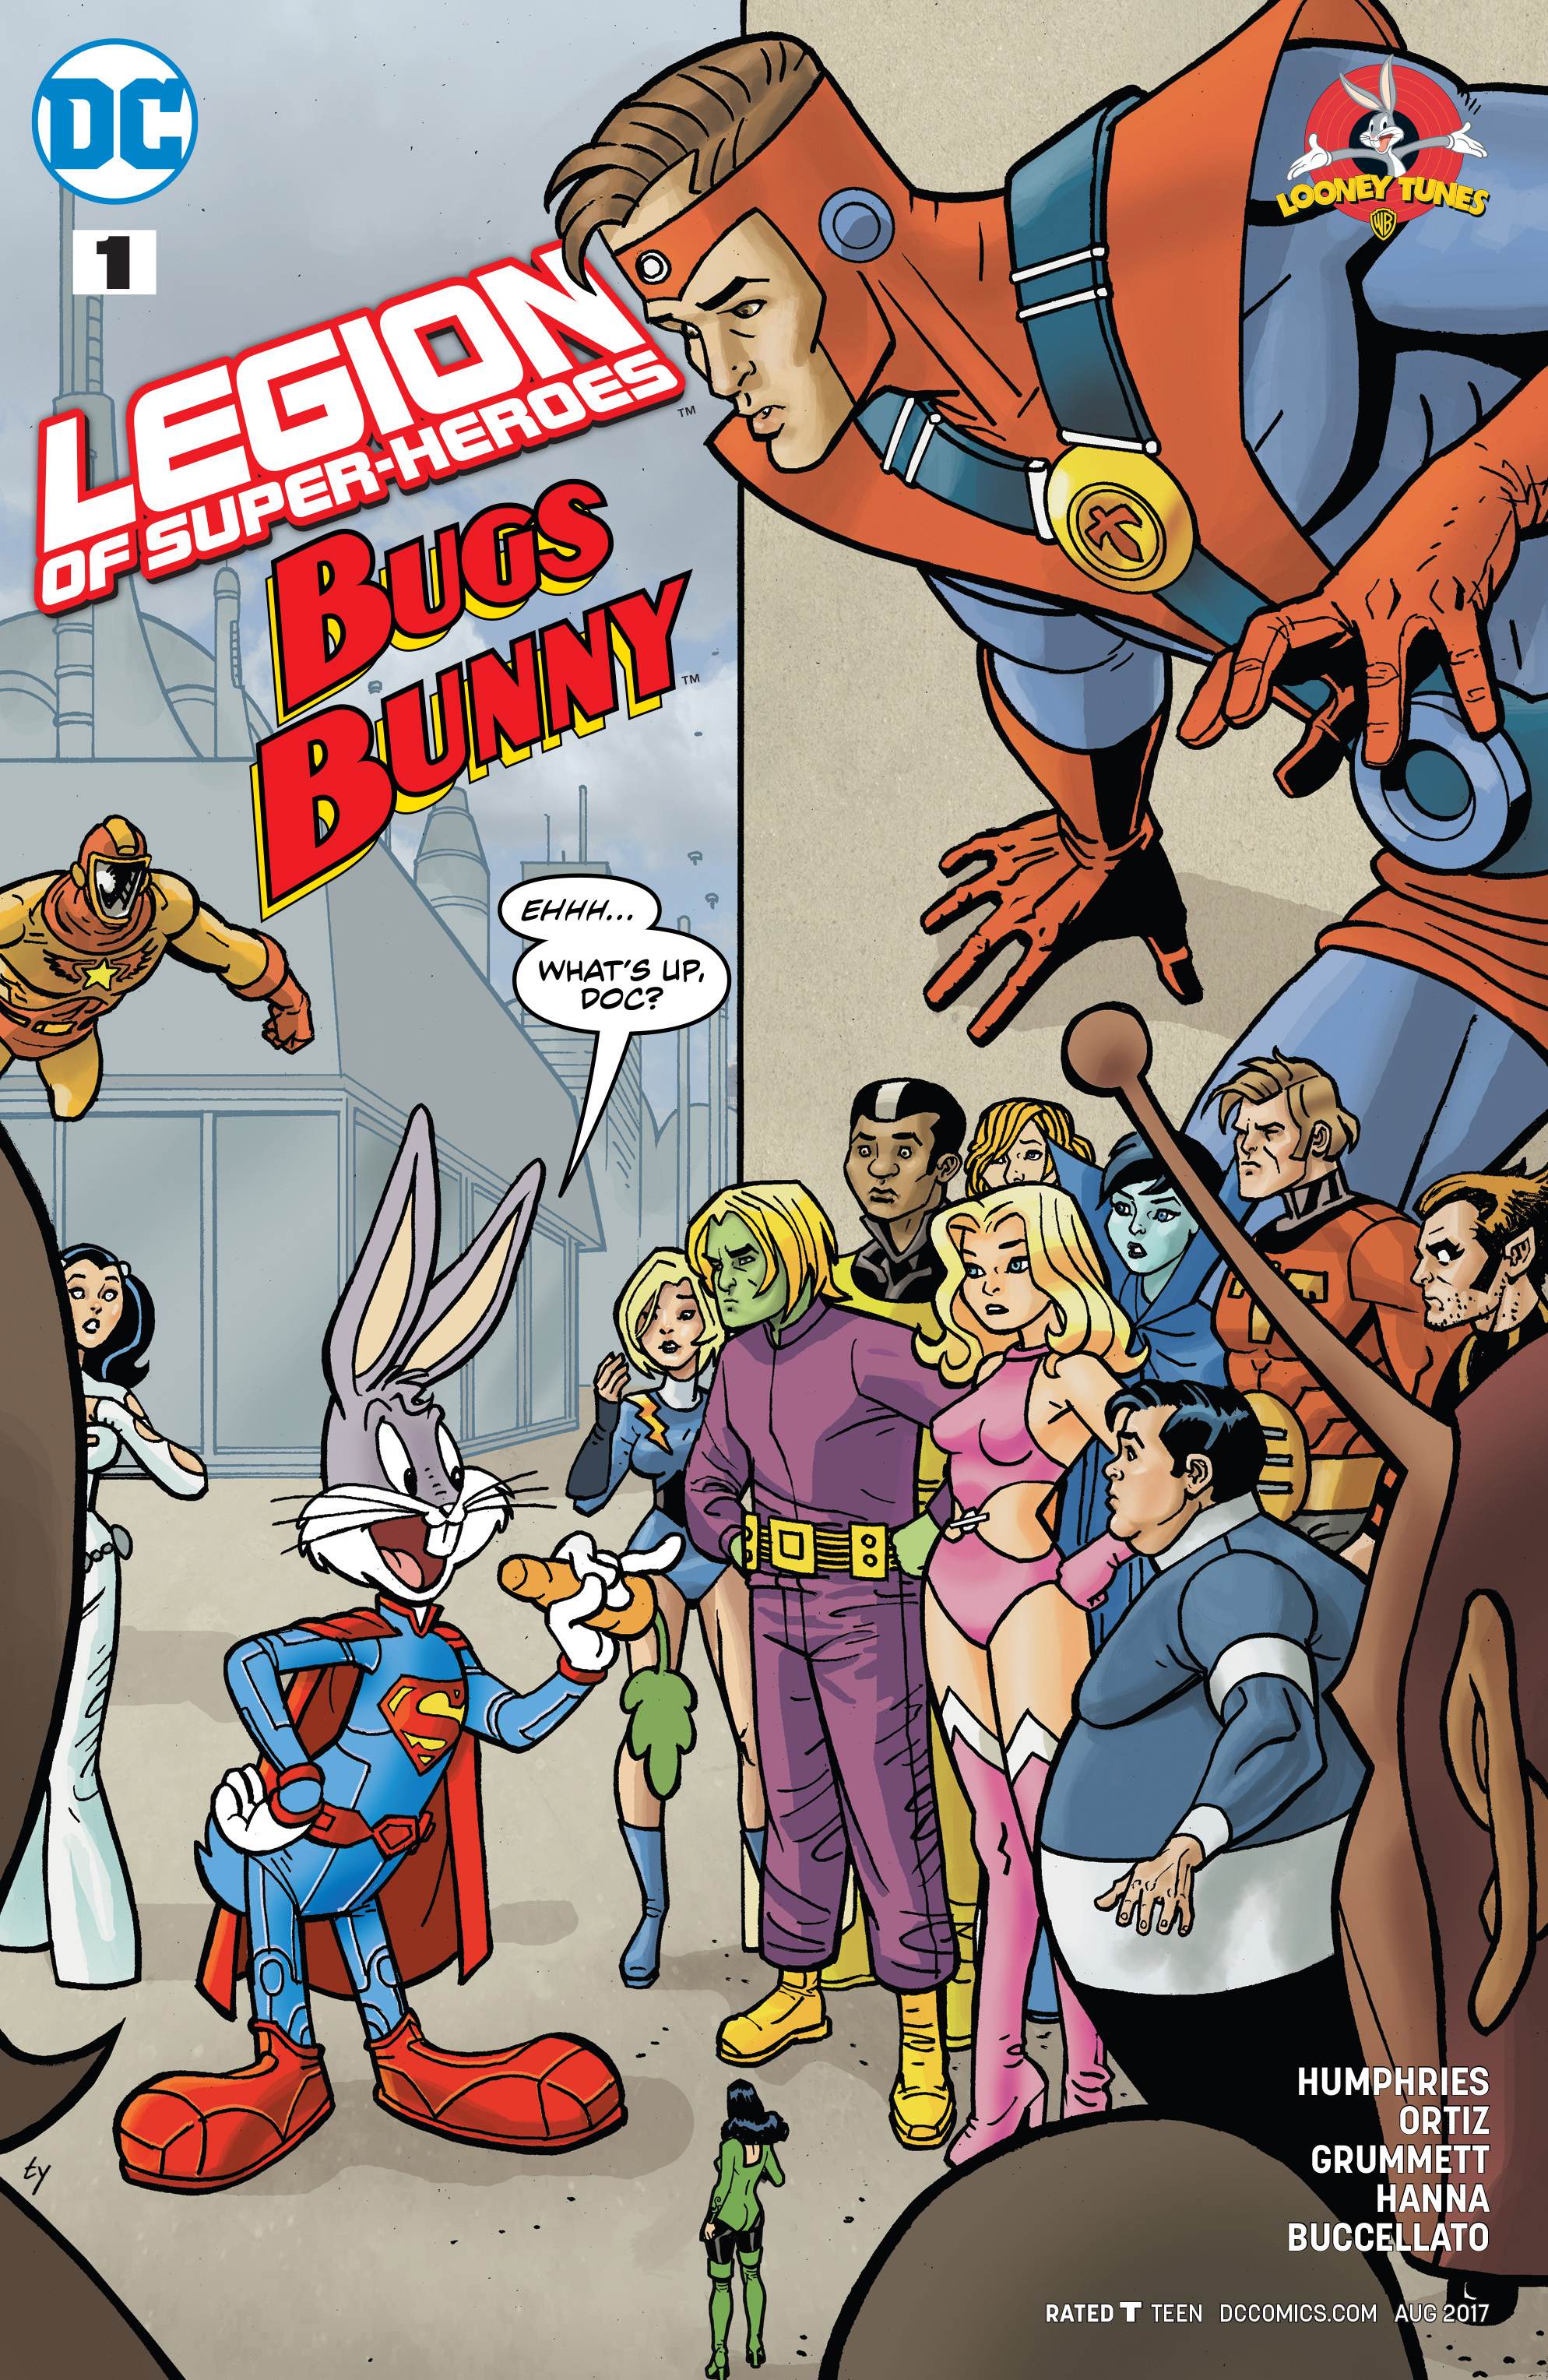 LEGION OF SUPER HEROES BUGS BUNNY SPECIAL #1 VAR ED